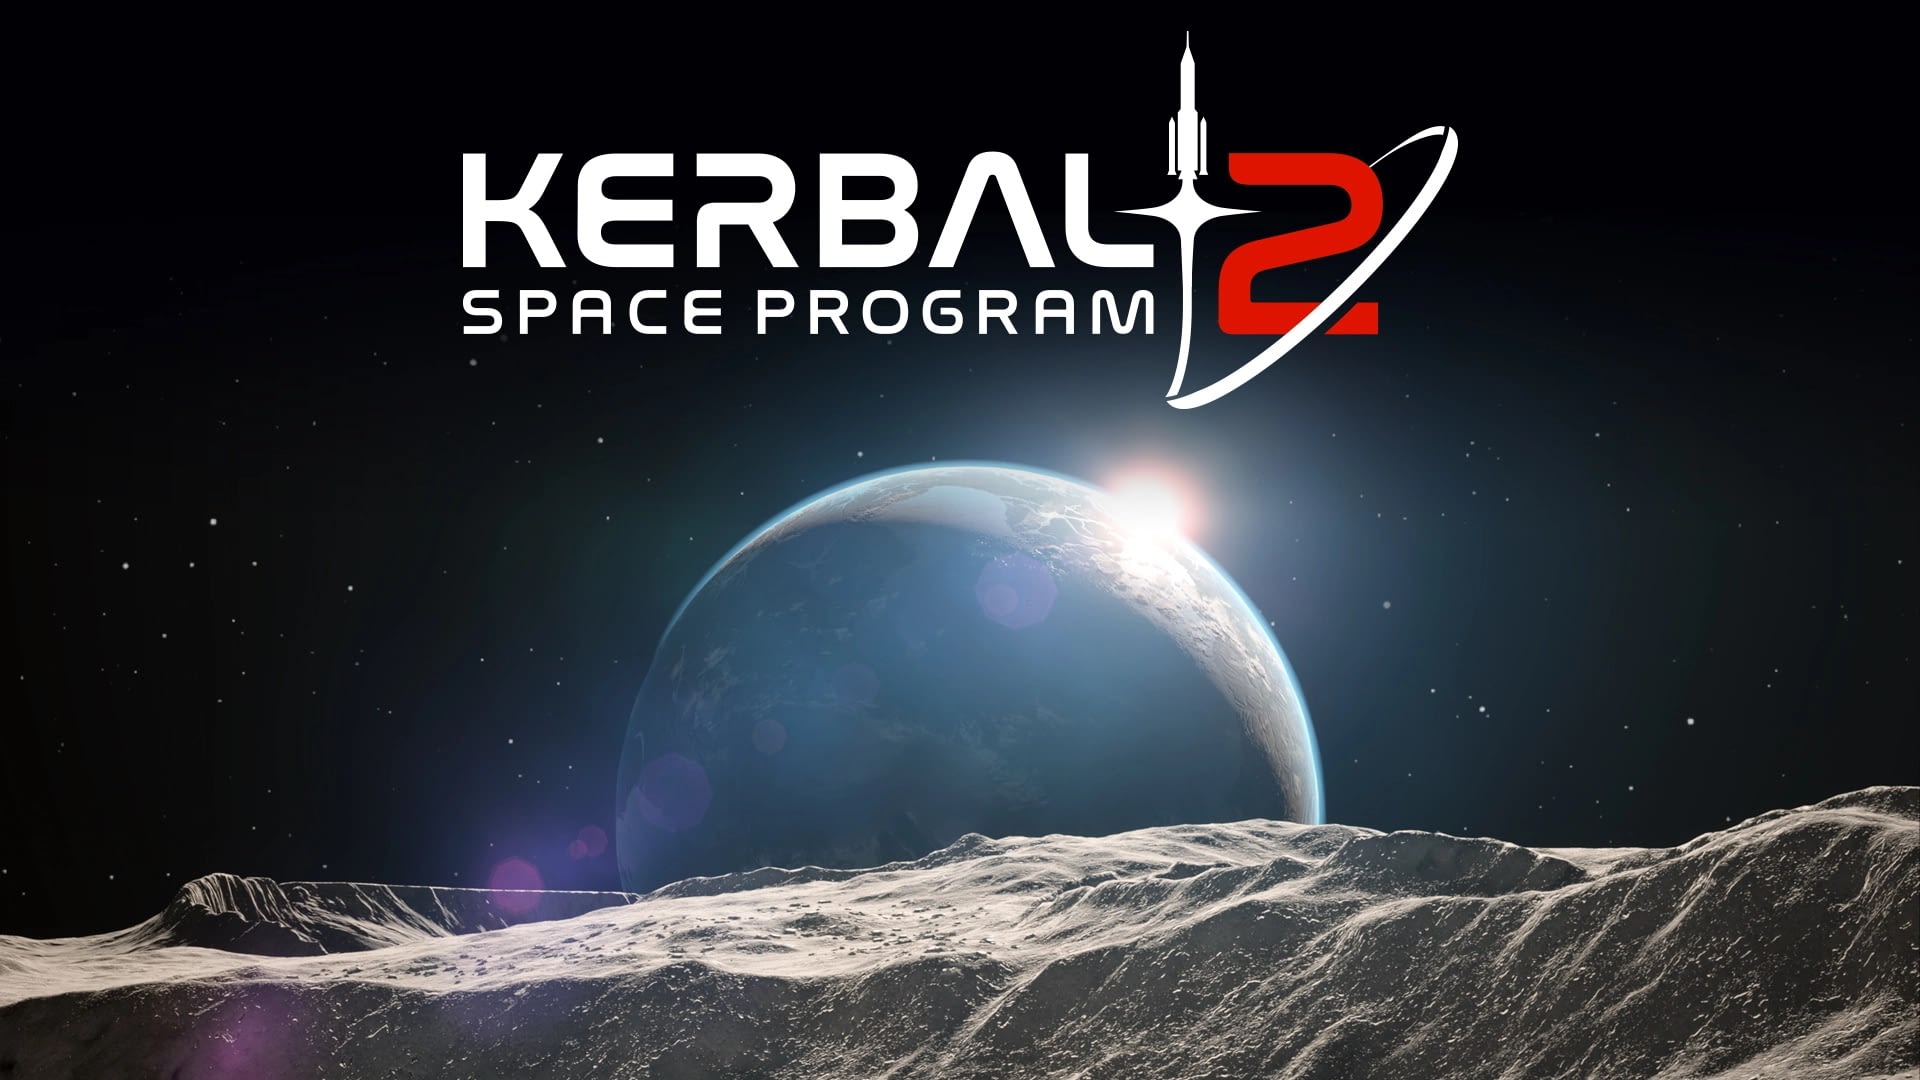 kerbal space program 1.0 money cheat